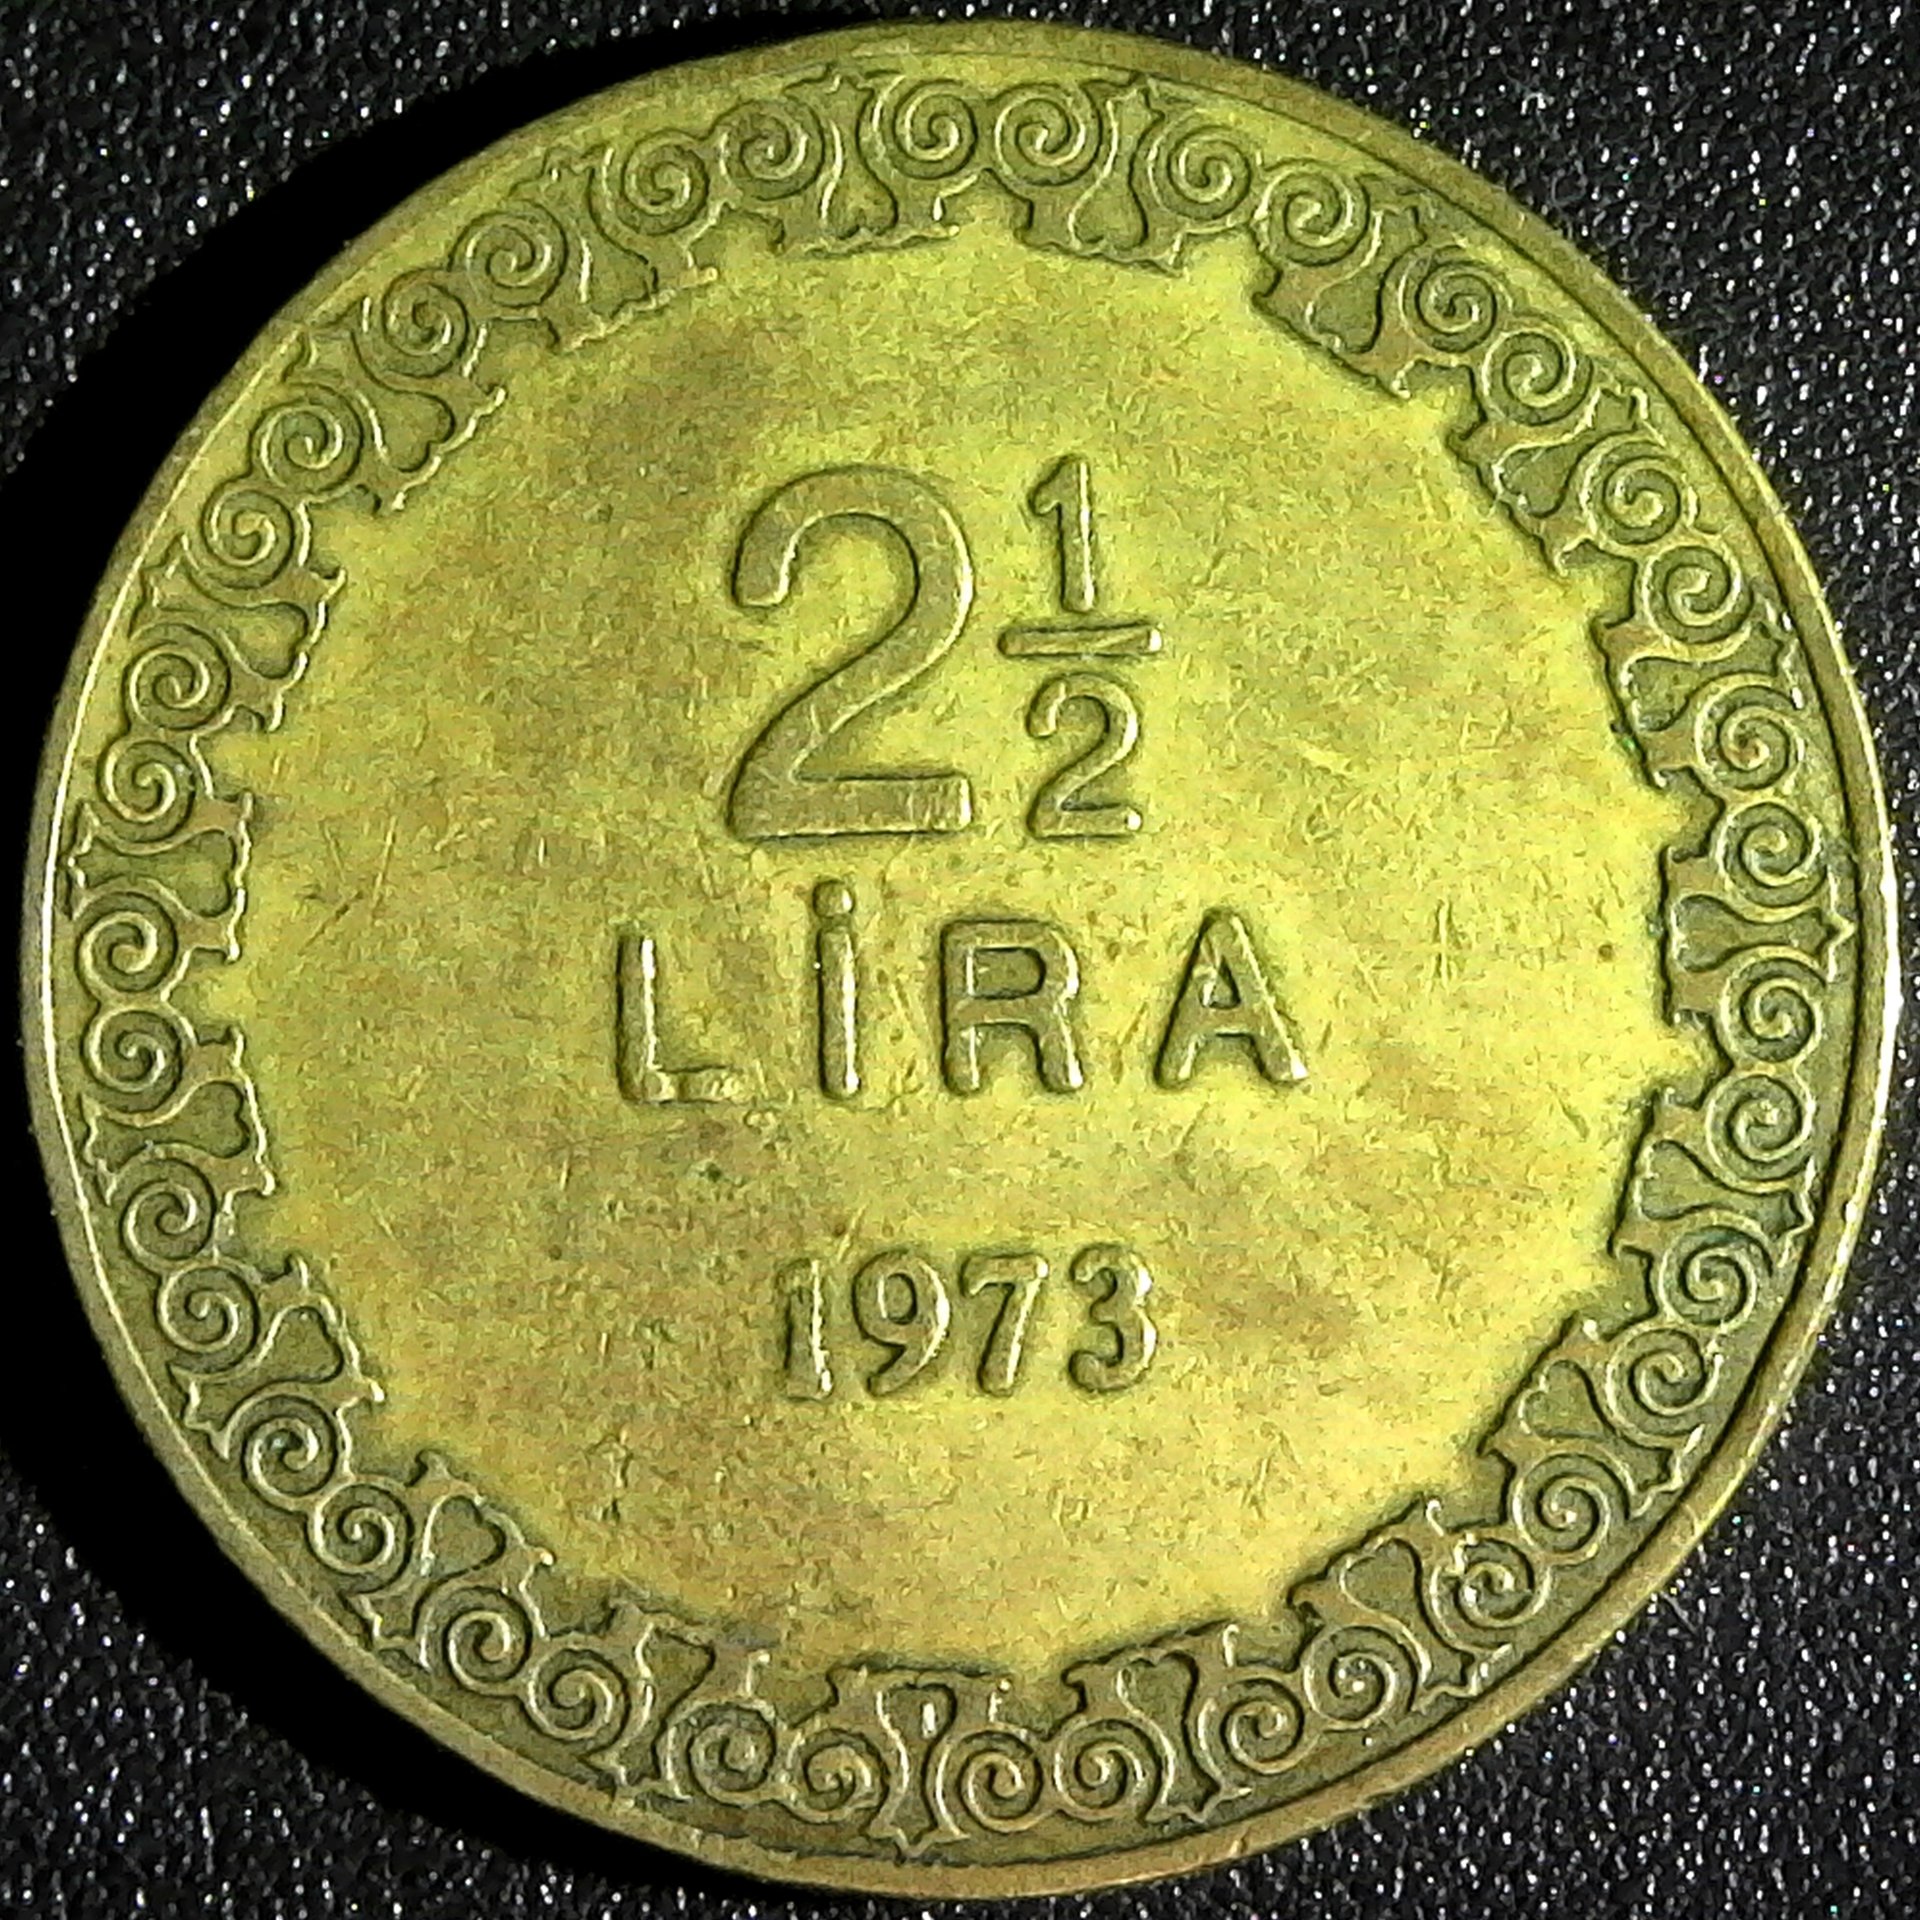 Turkey Prsion token two and a half Lira 1973 rev.jpg